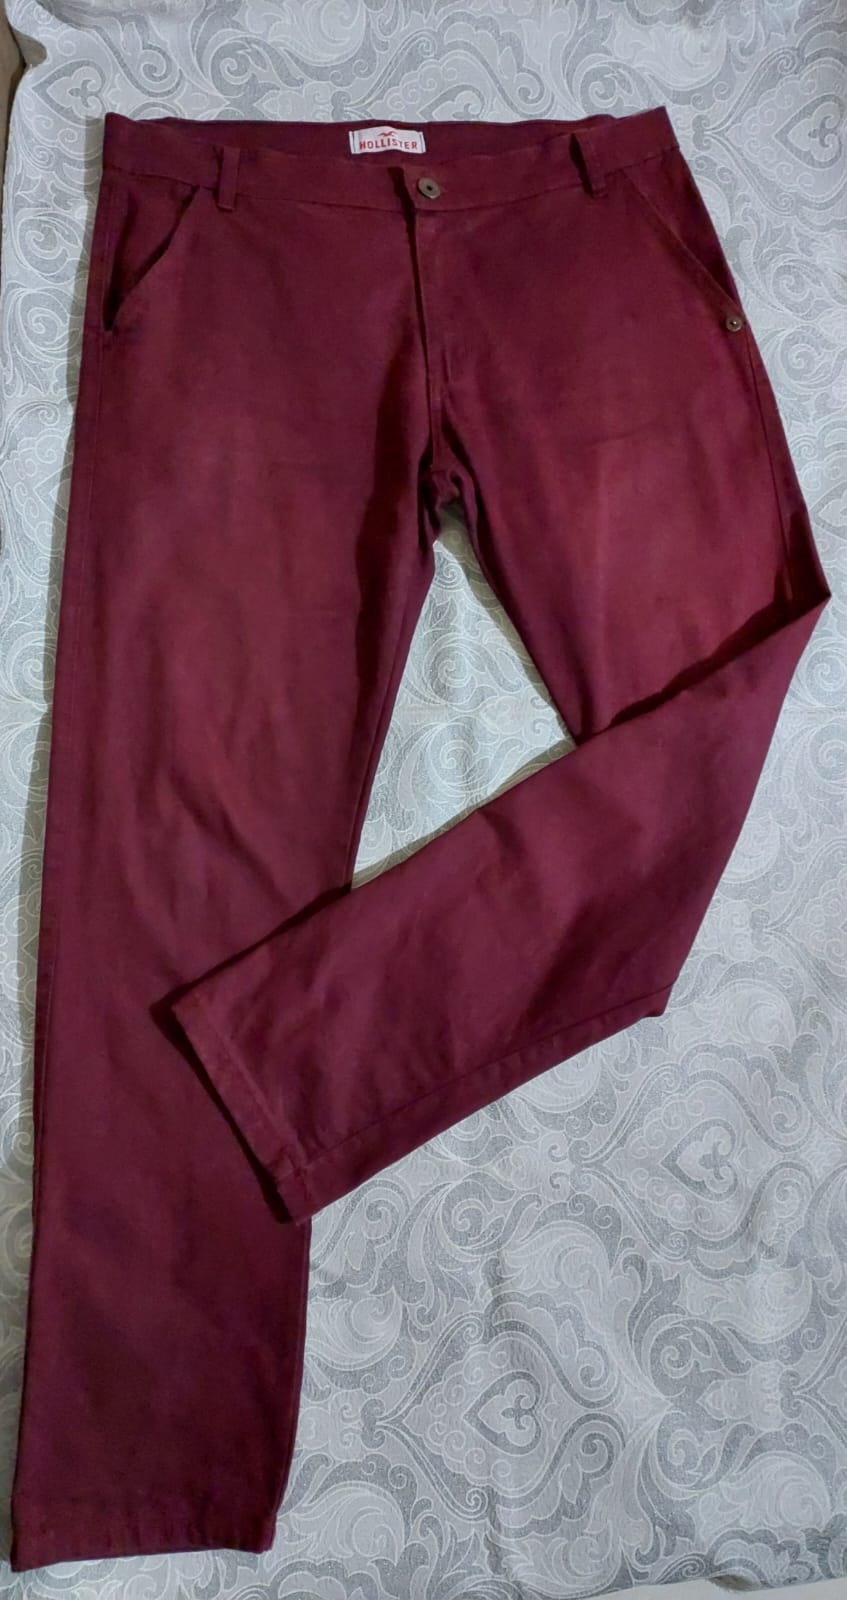 COD: 10424L – Calça masculina, Hollister, cor marsala, com elastano, tamanho 46, usada